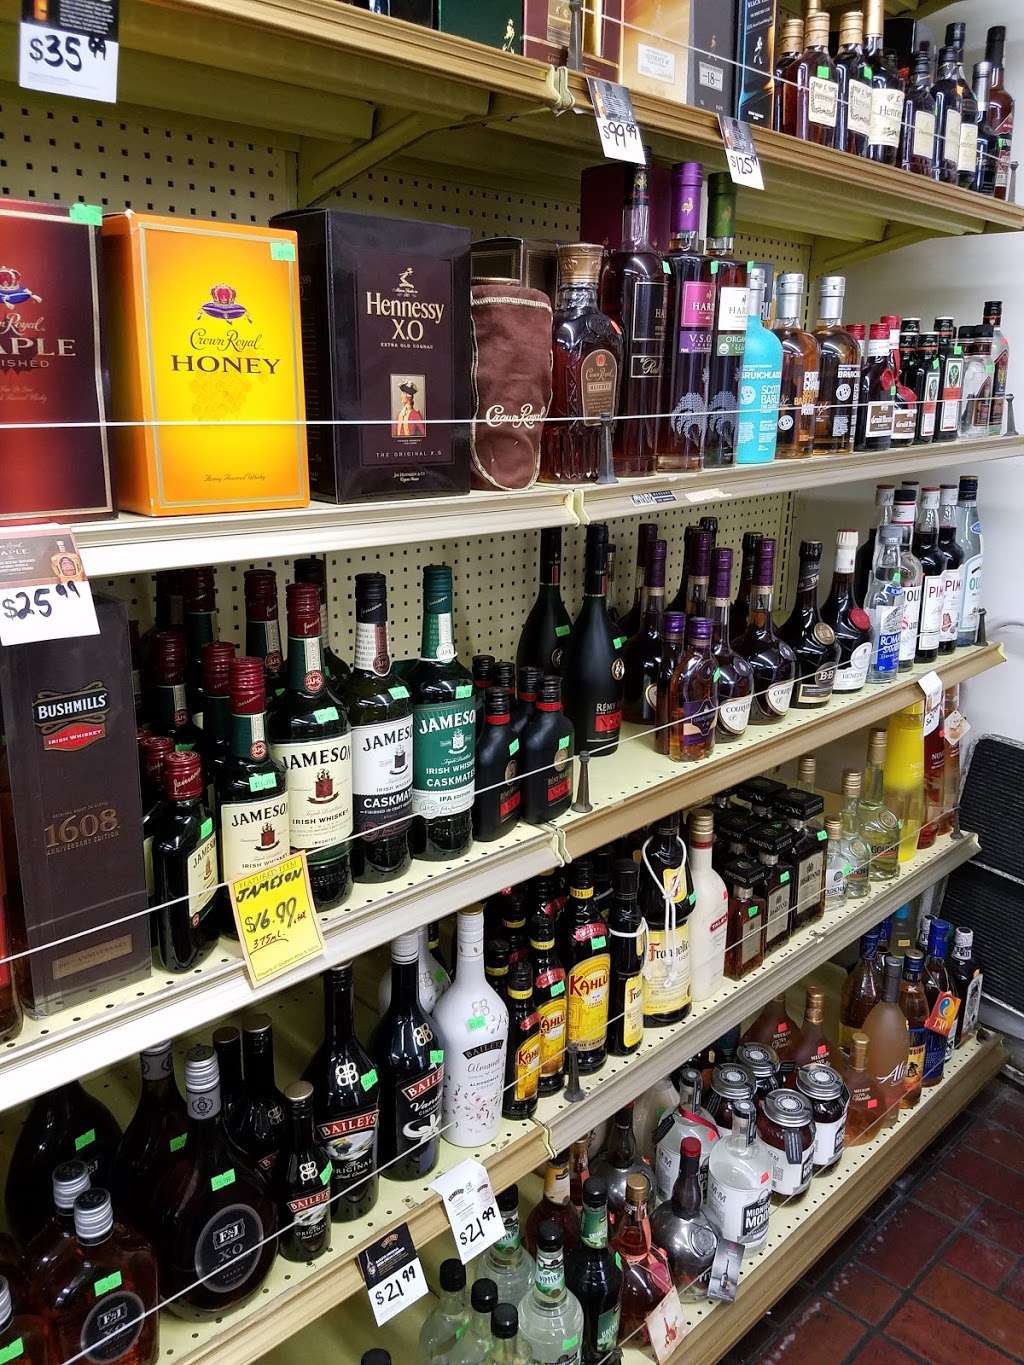 Sunny Hills Liquor Jr Mart | 1510 S Harbor Blvd, La Habra, CA 90631, USA | Phone: (714) 525-0866